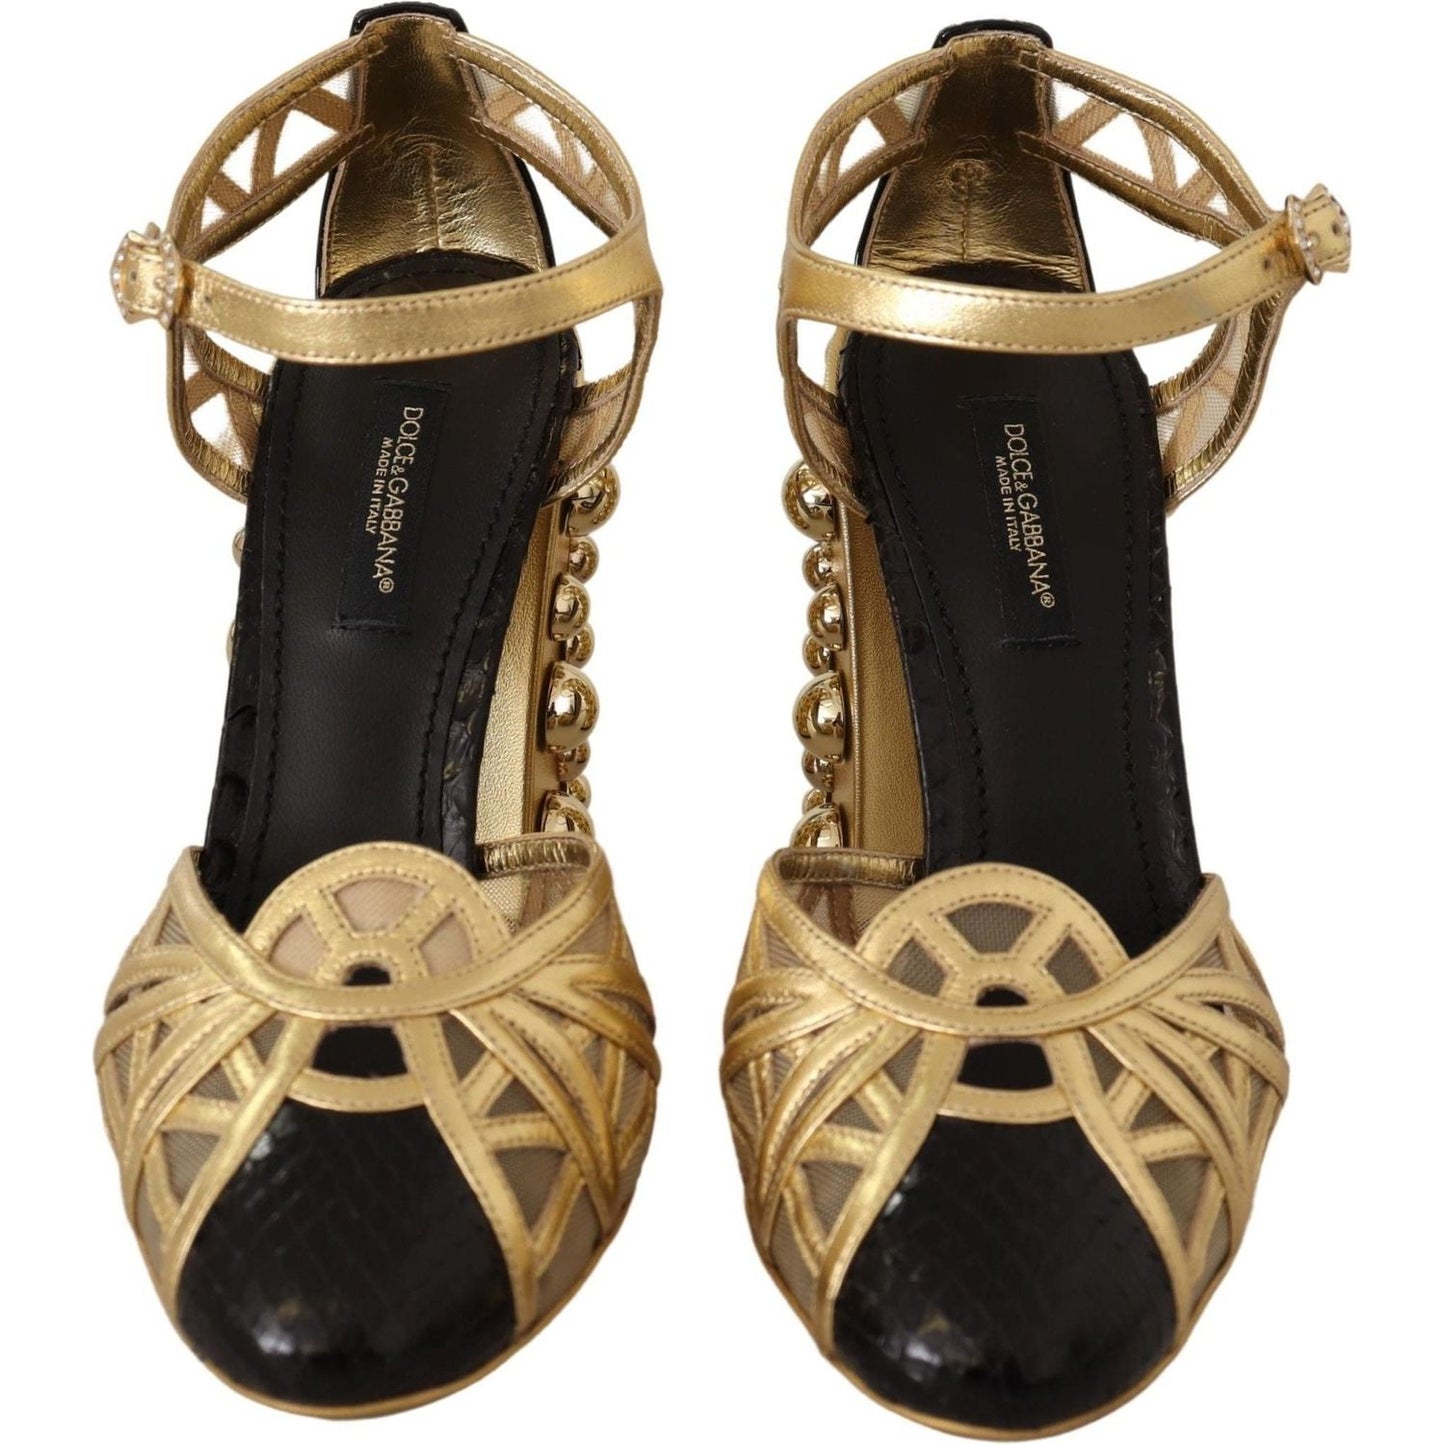 Dolce & Gabbana Elegant Crystal Studded Leather Pumps black-gold-leather-studded-ankle-straps-shoes IMG_5832-20623fac-f64.jpg